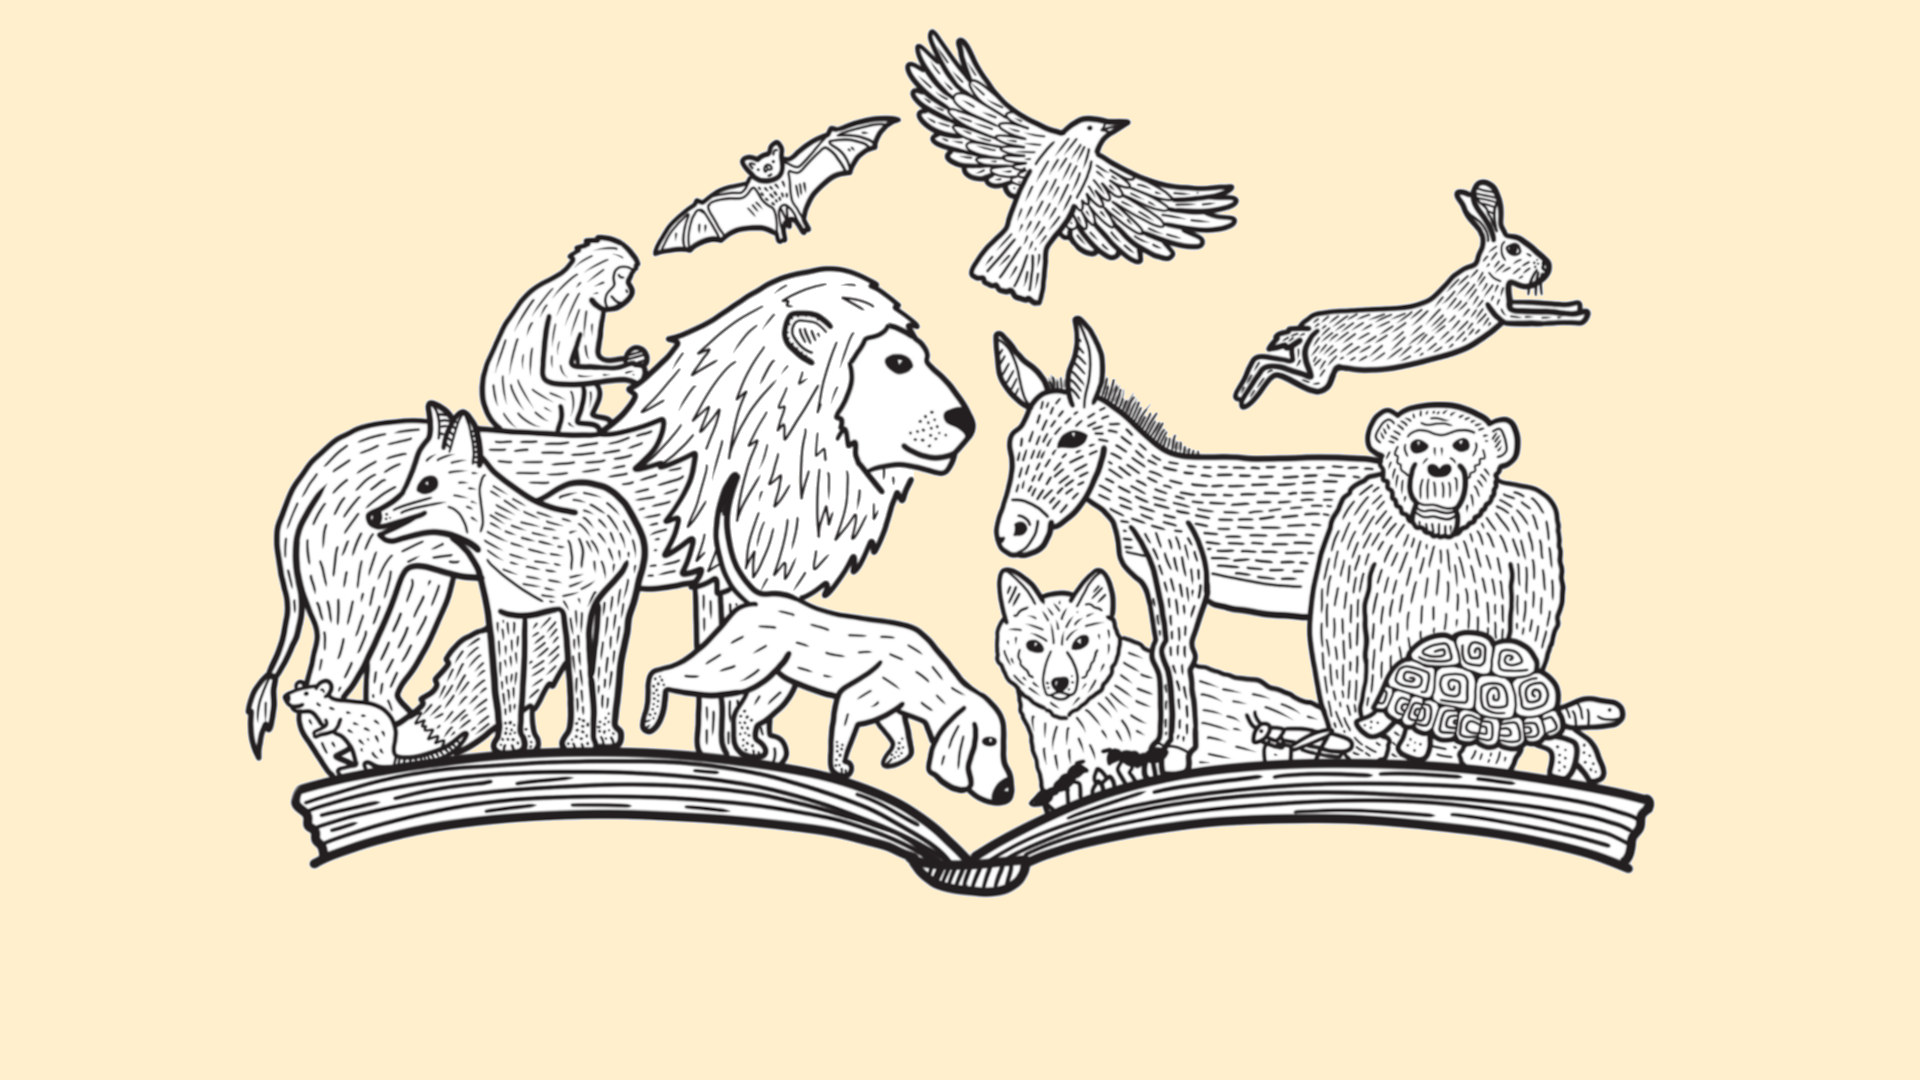 An illustration from "Aesop's Animals" by Hana Ayoob.